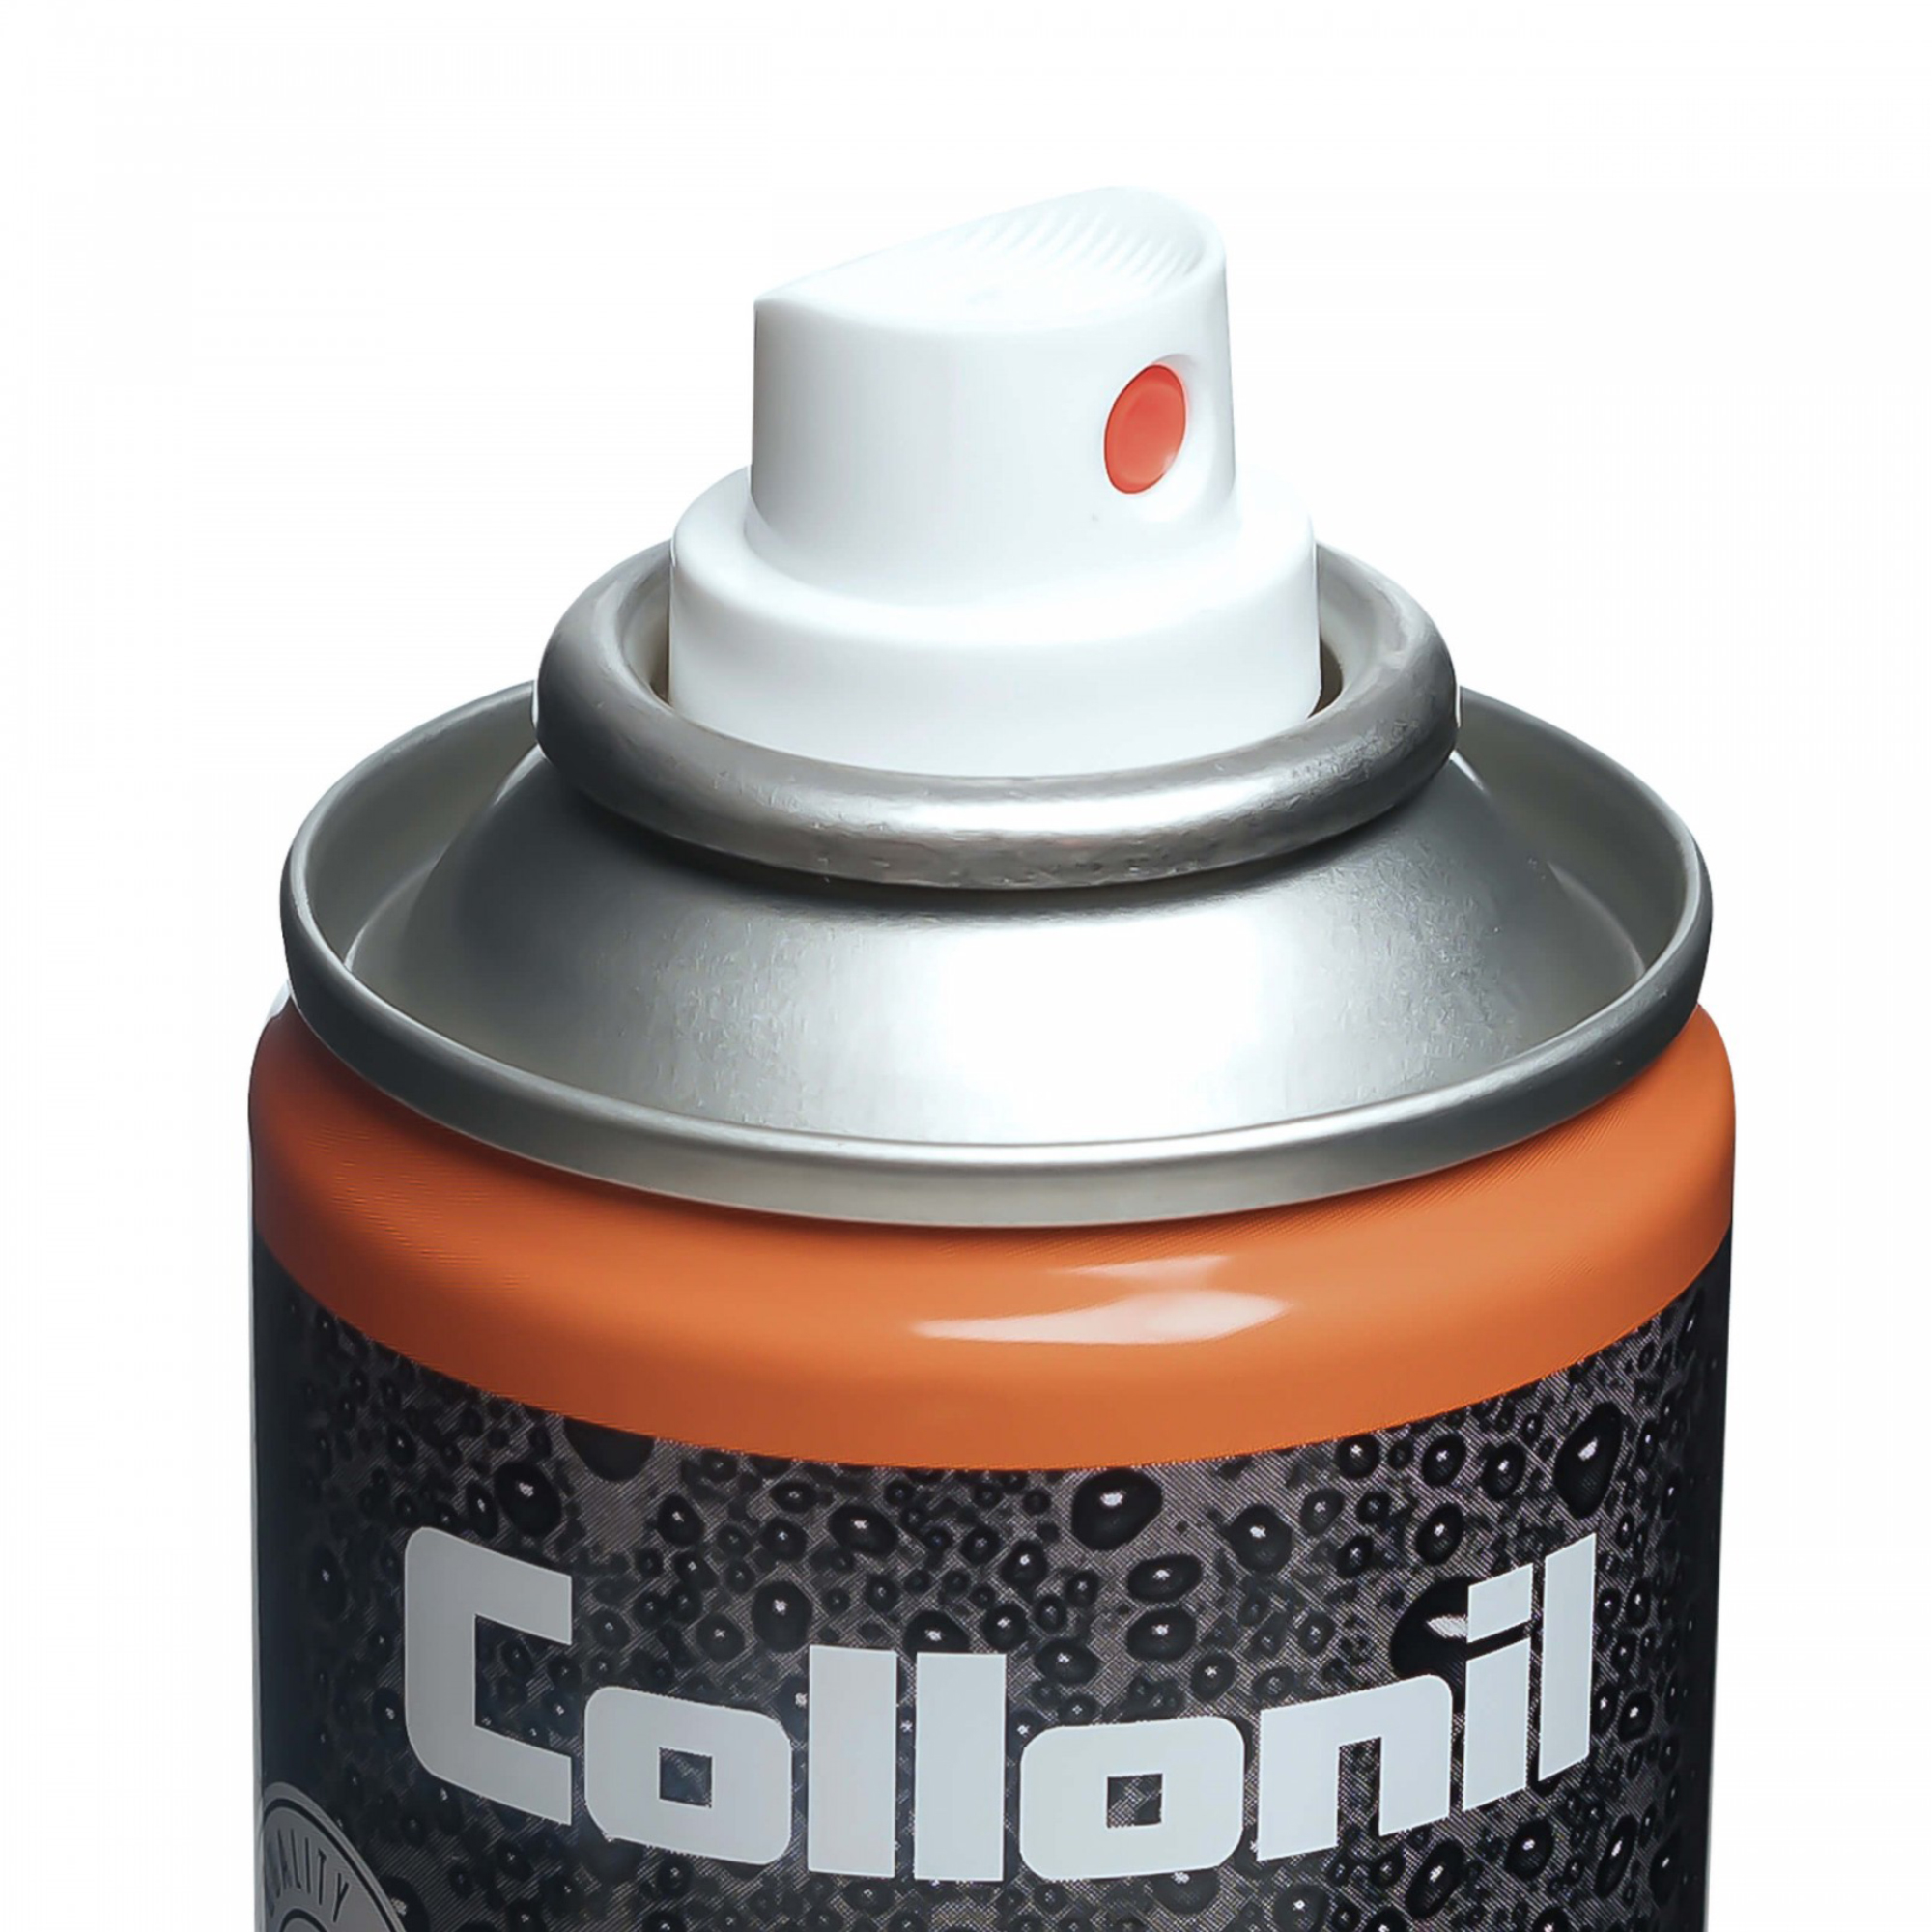 Collonil Carbon Pro impregneer spray 300ml